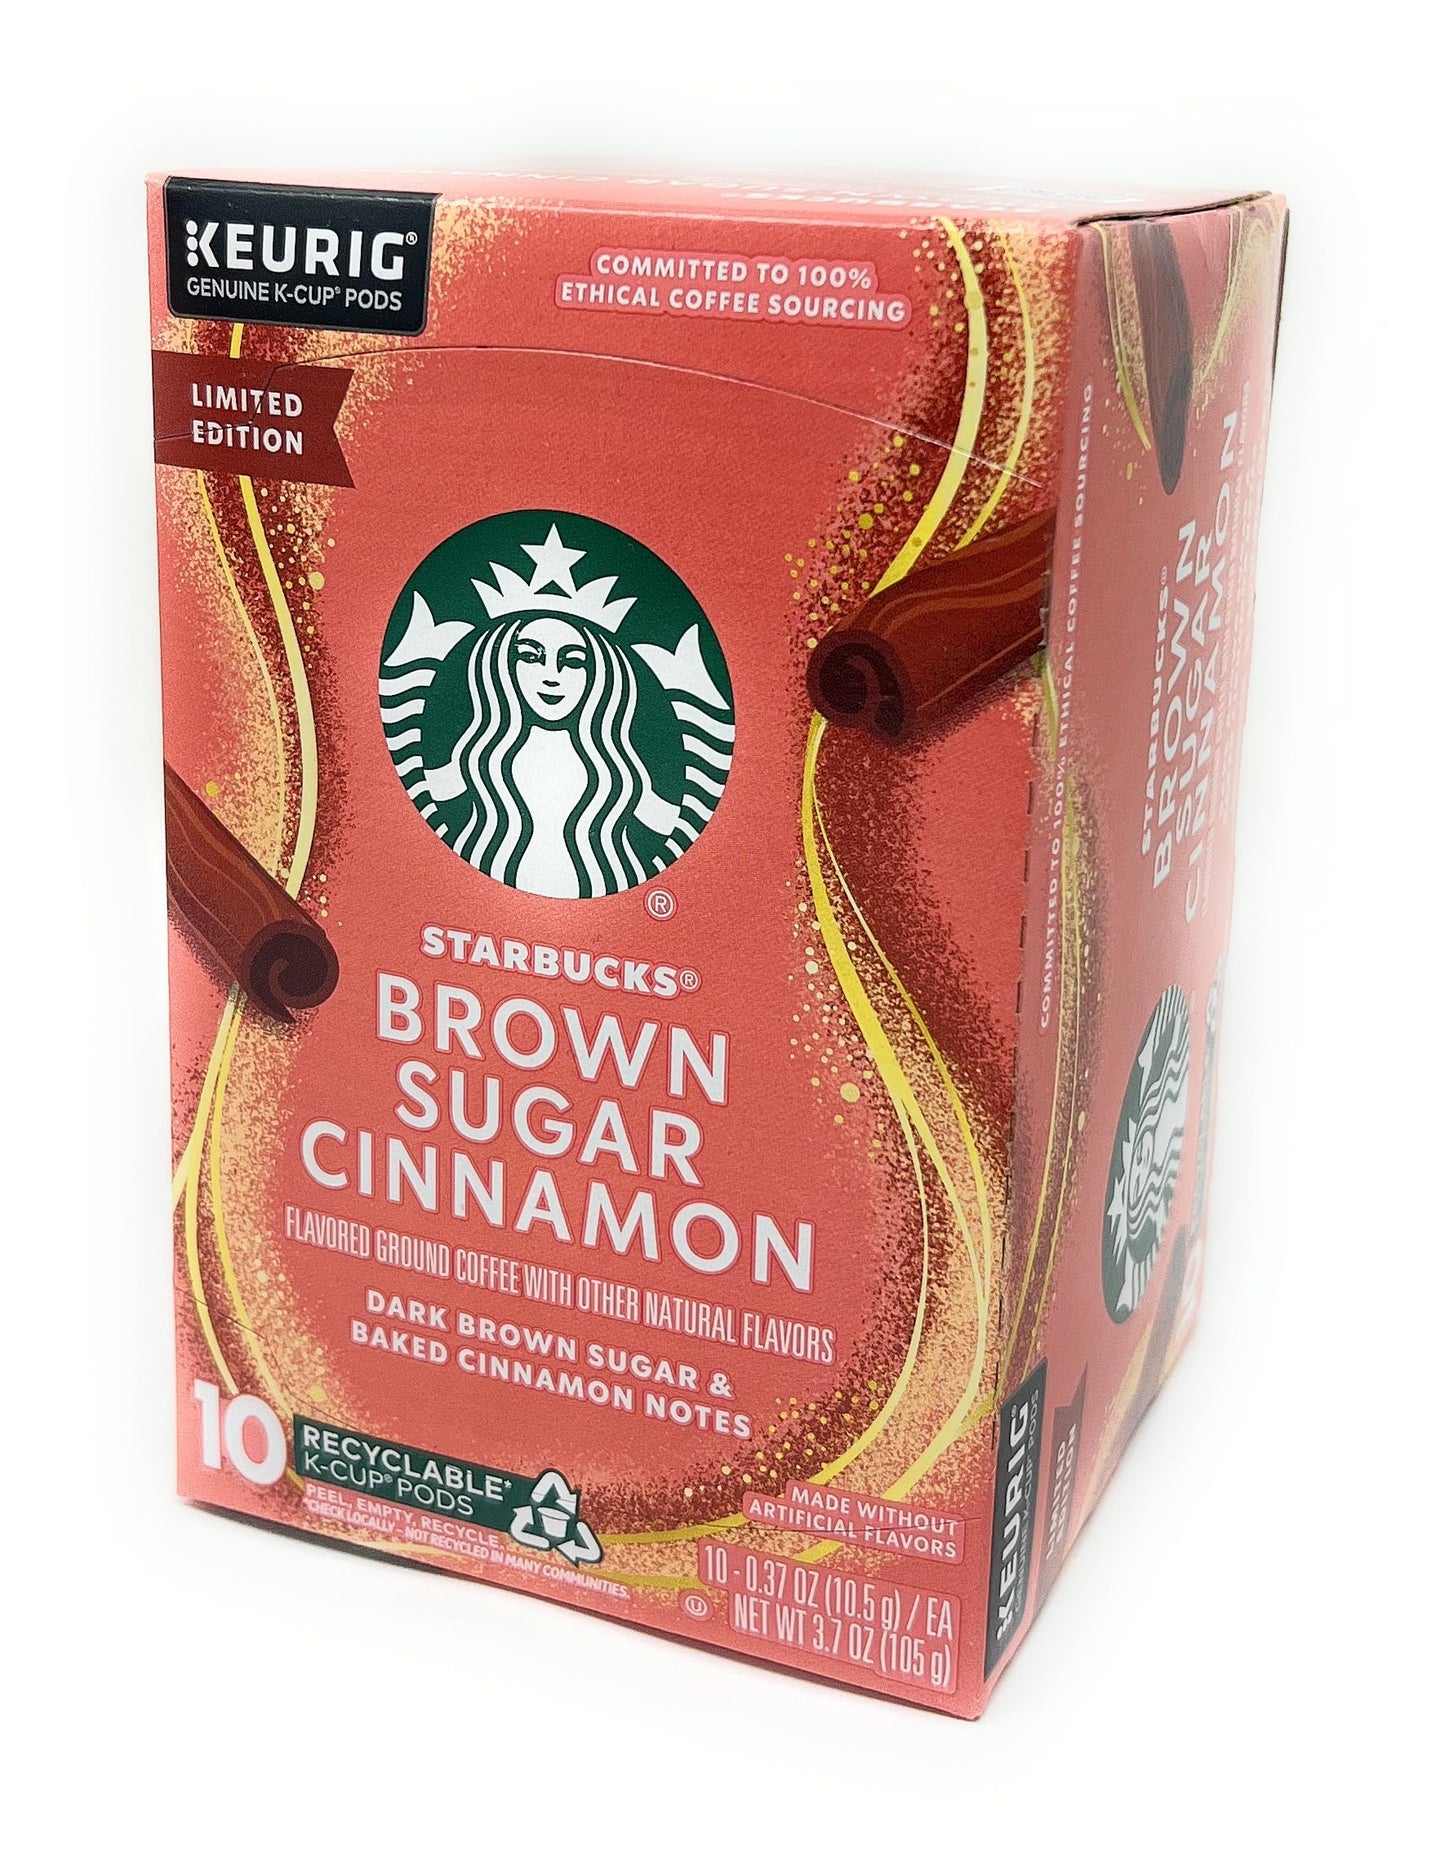 Starbucks Brown Sugar Cinnamon K-Cup Coffee Pods - 10 count - 1 box